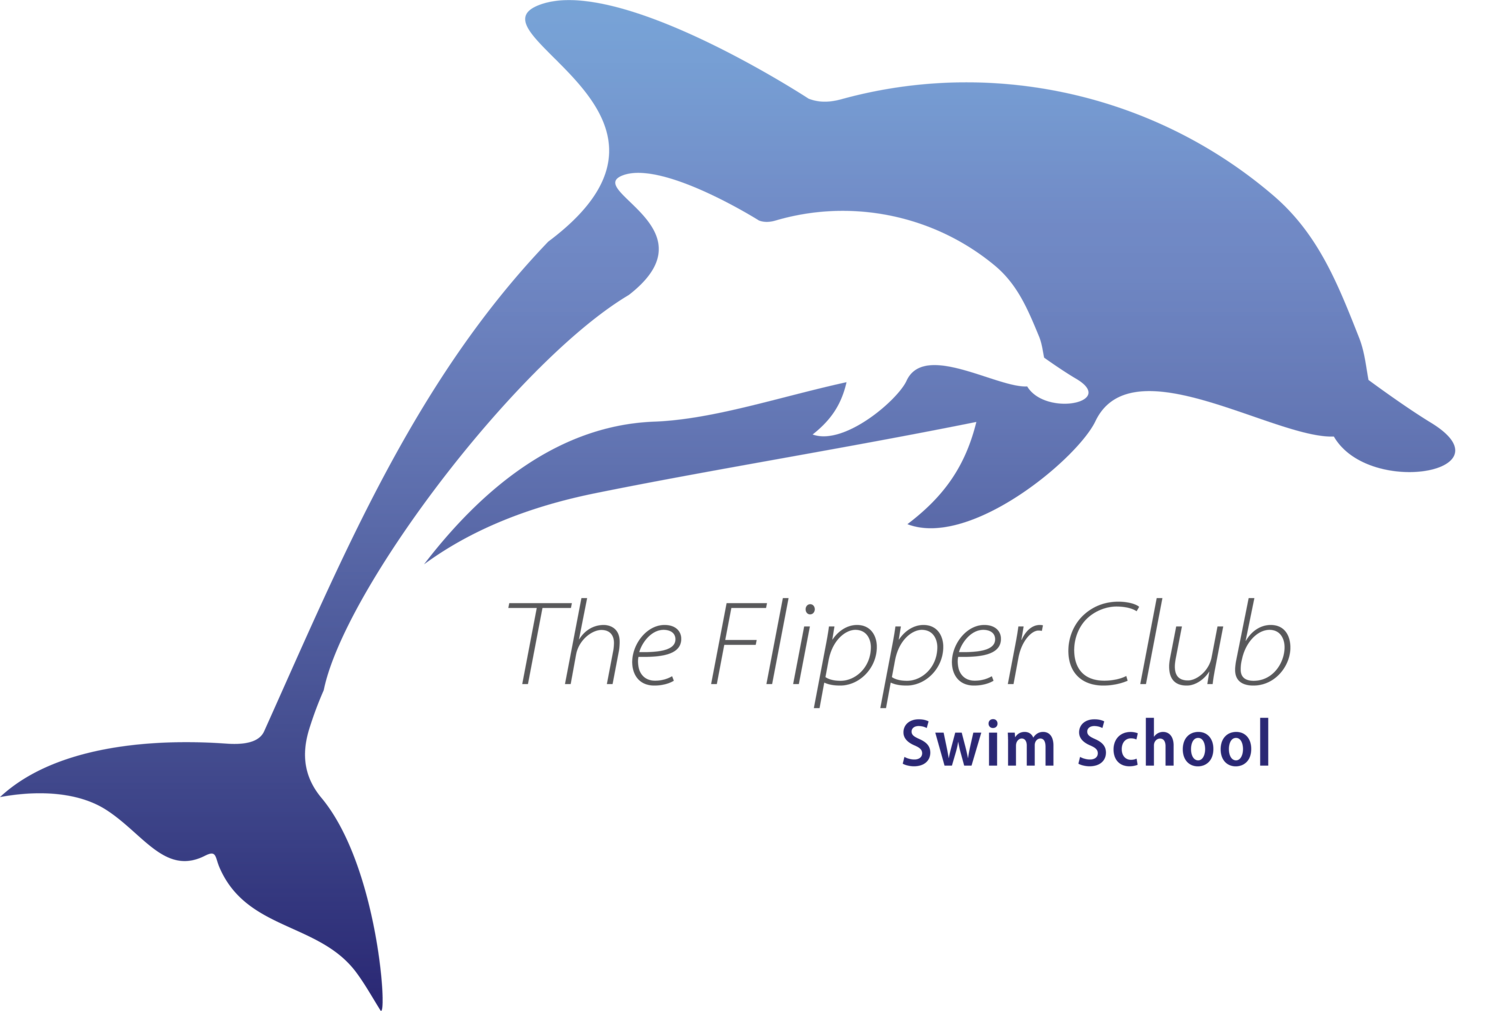 The Flipper Club